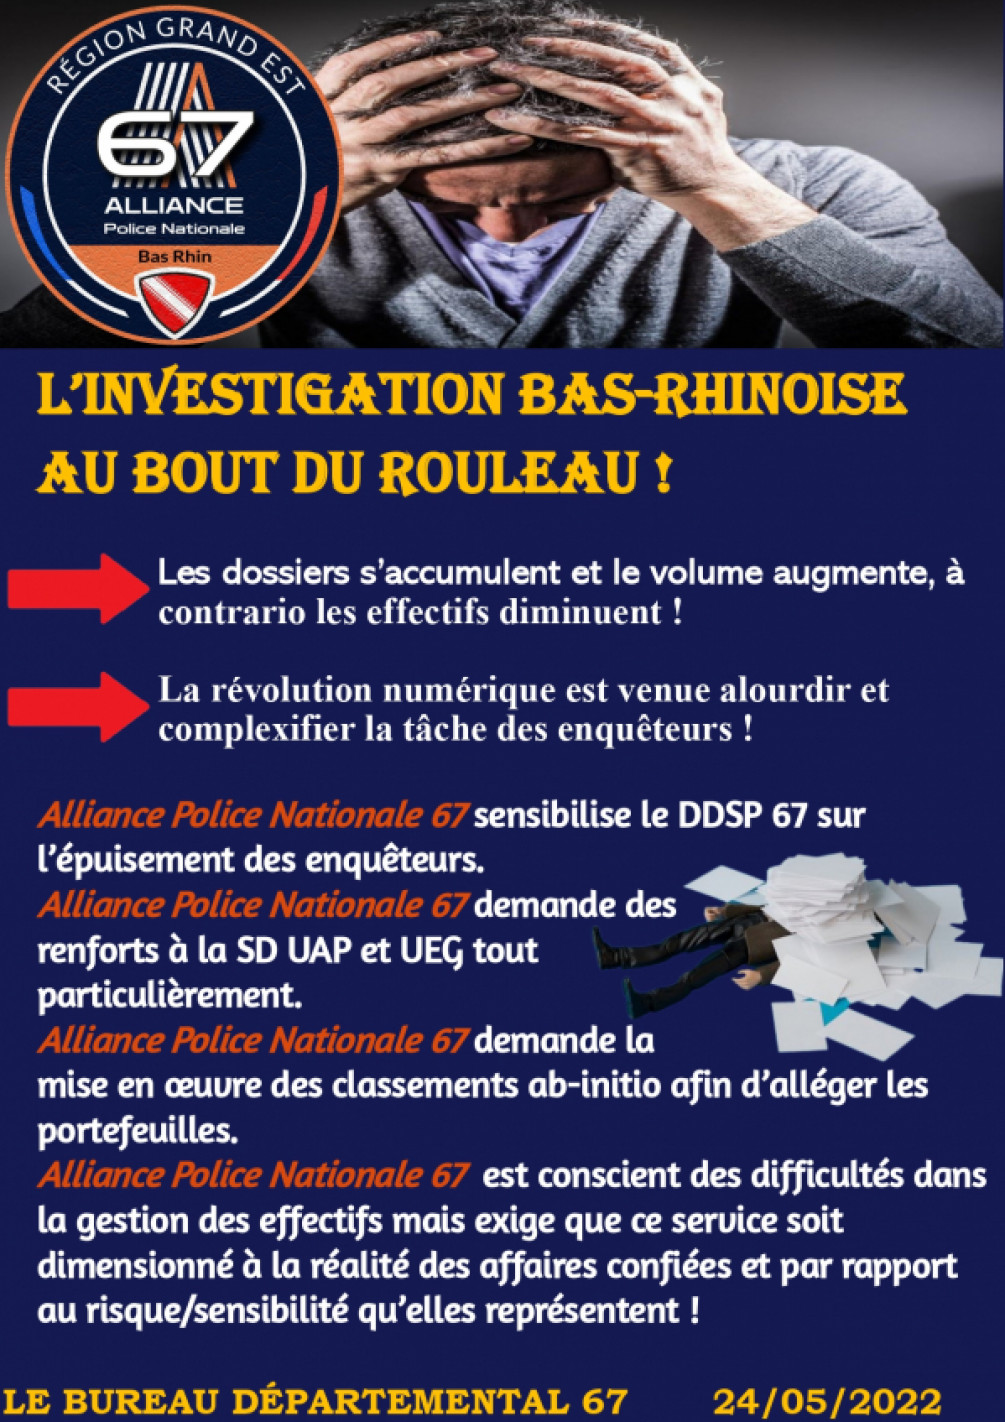 L'investigation Bas-Rhinoise